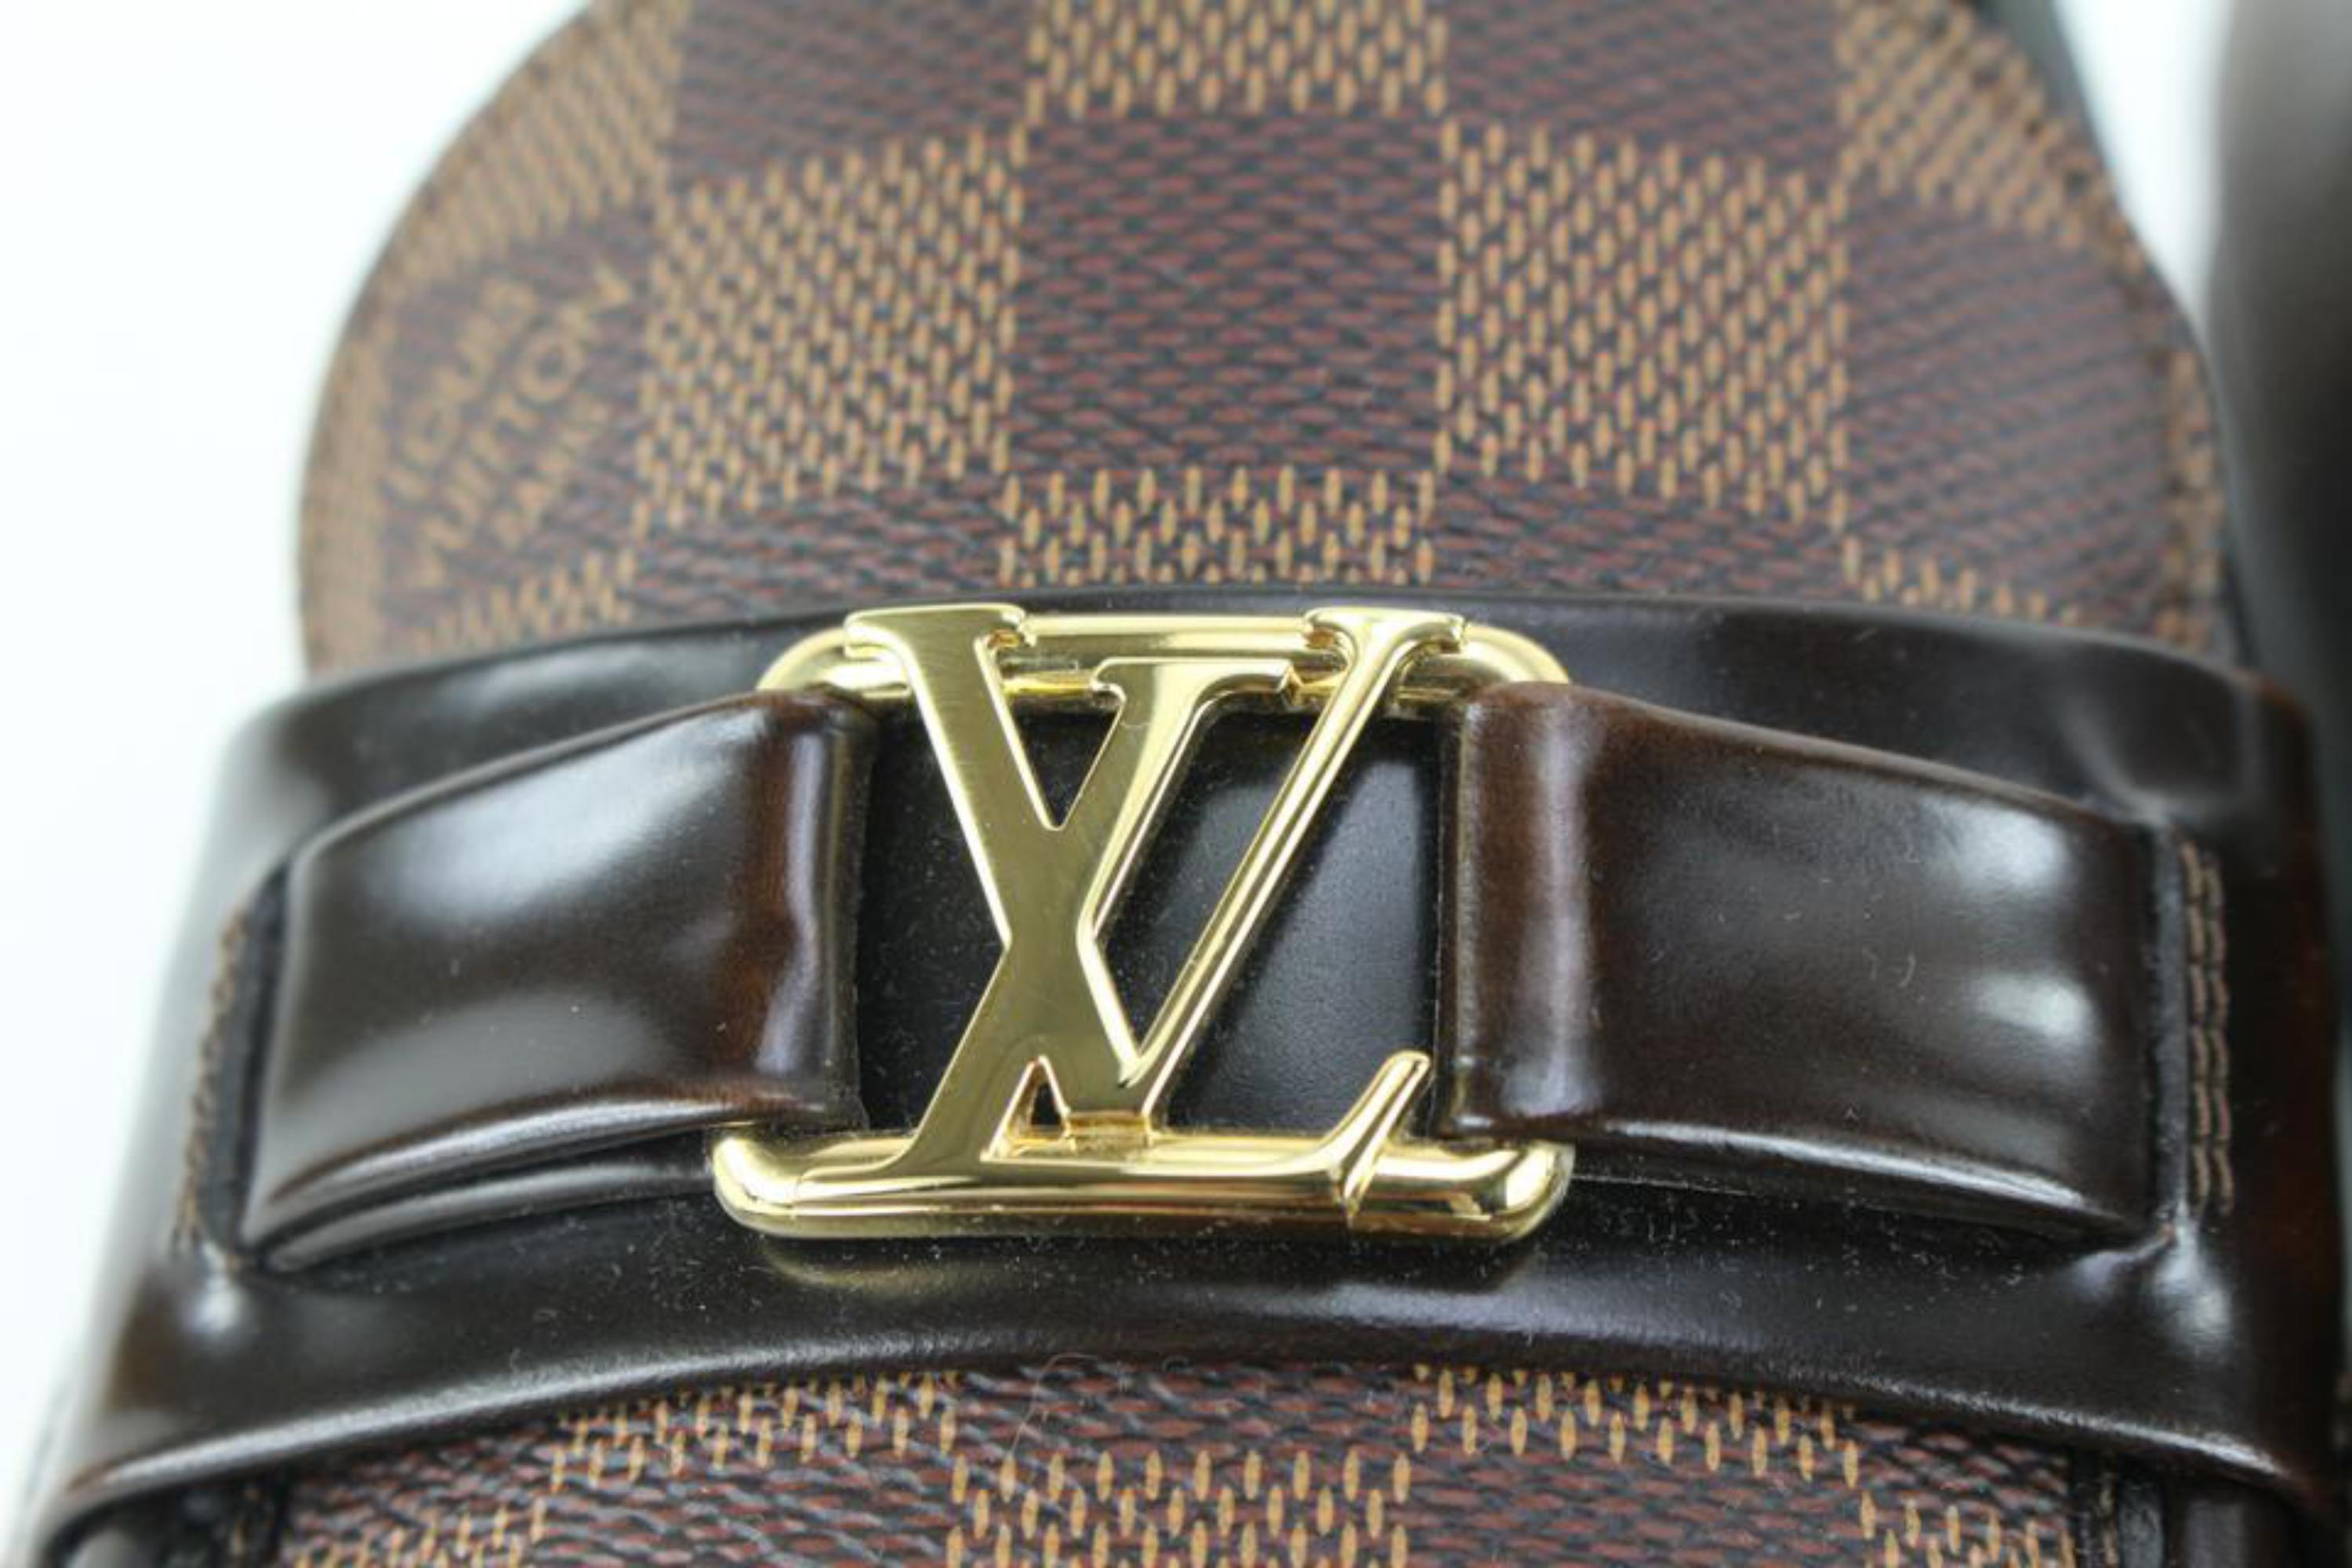 Louis Vuitton, Shoes, Louis Vuitton Mens Major Loafers Giant Damier  Graphite With Leather Black